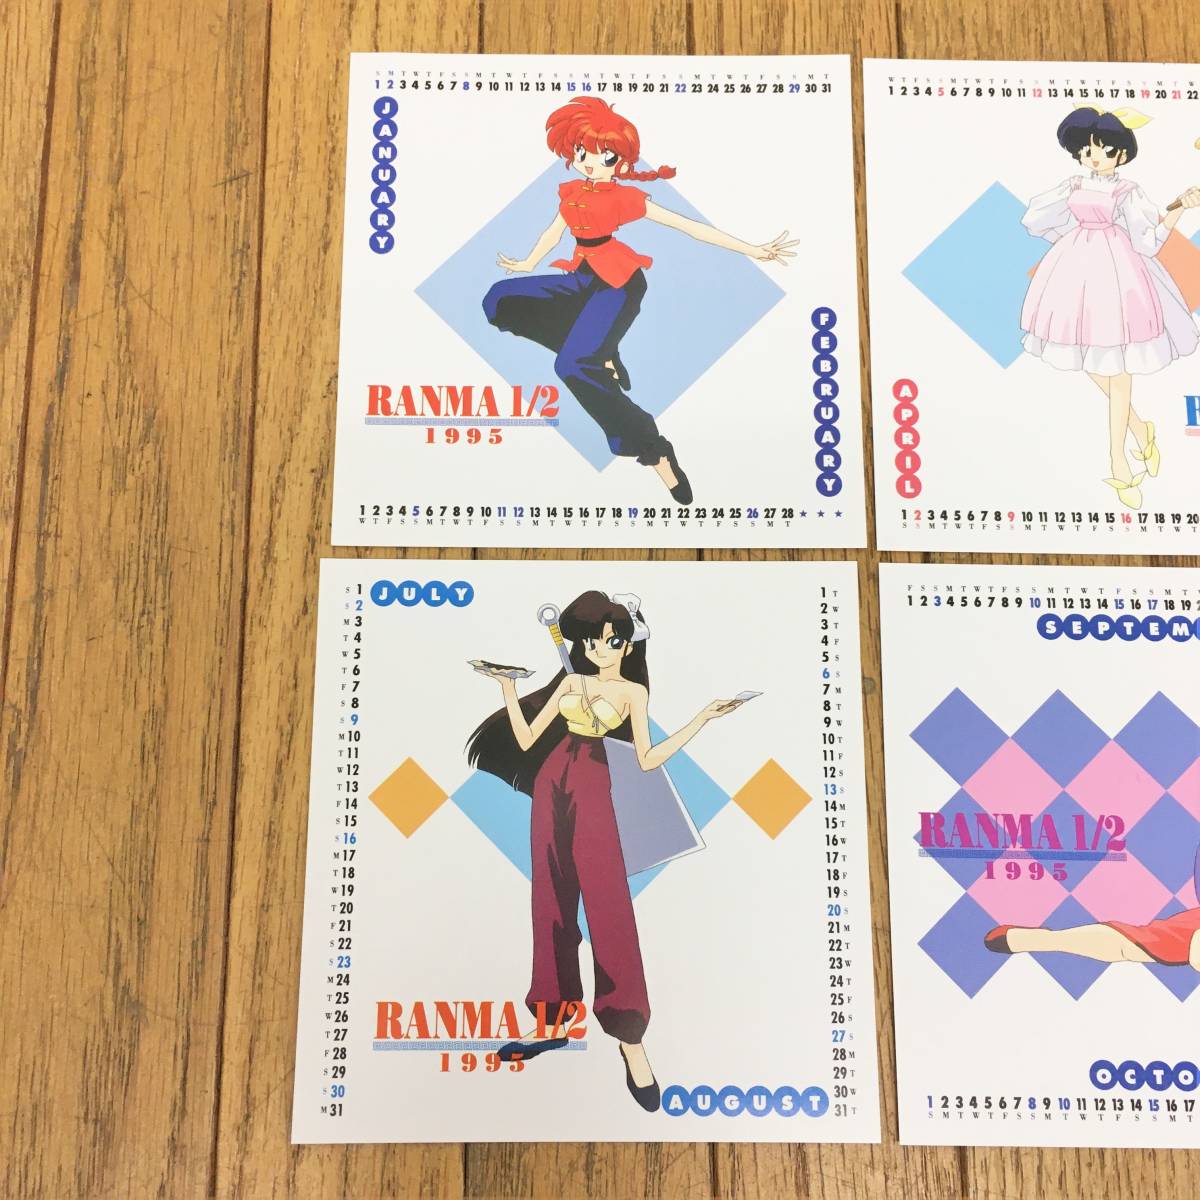  Ranma 1/2 music calendar 1995 year /kacd3004/ height .. beautiful ./ anime / manga / season / Event / event /musiccalendar/ collection / Junk 